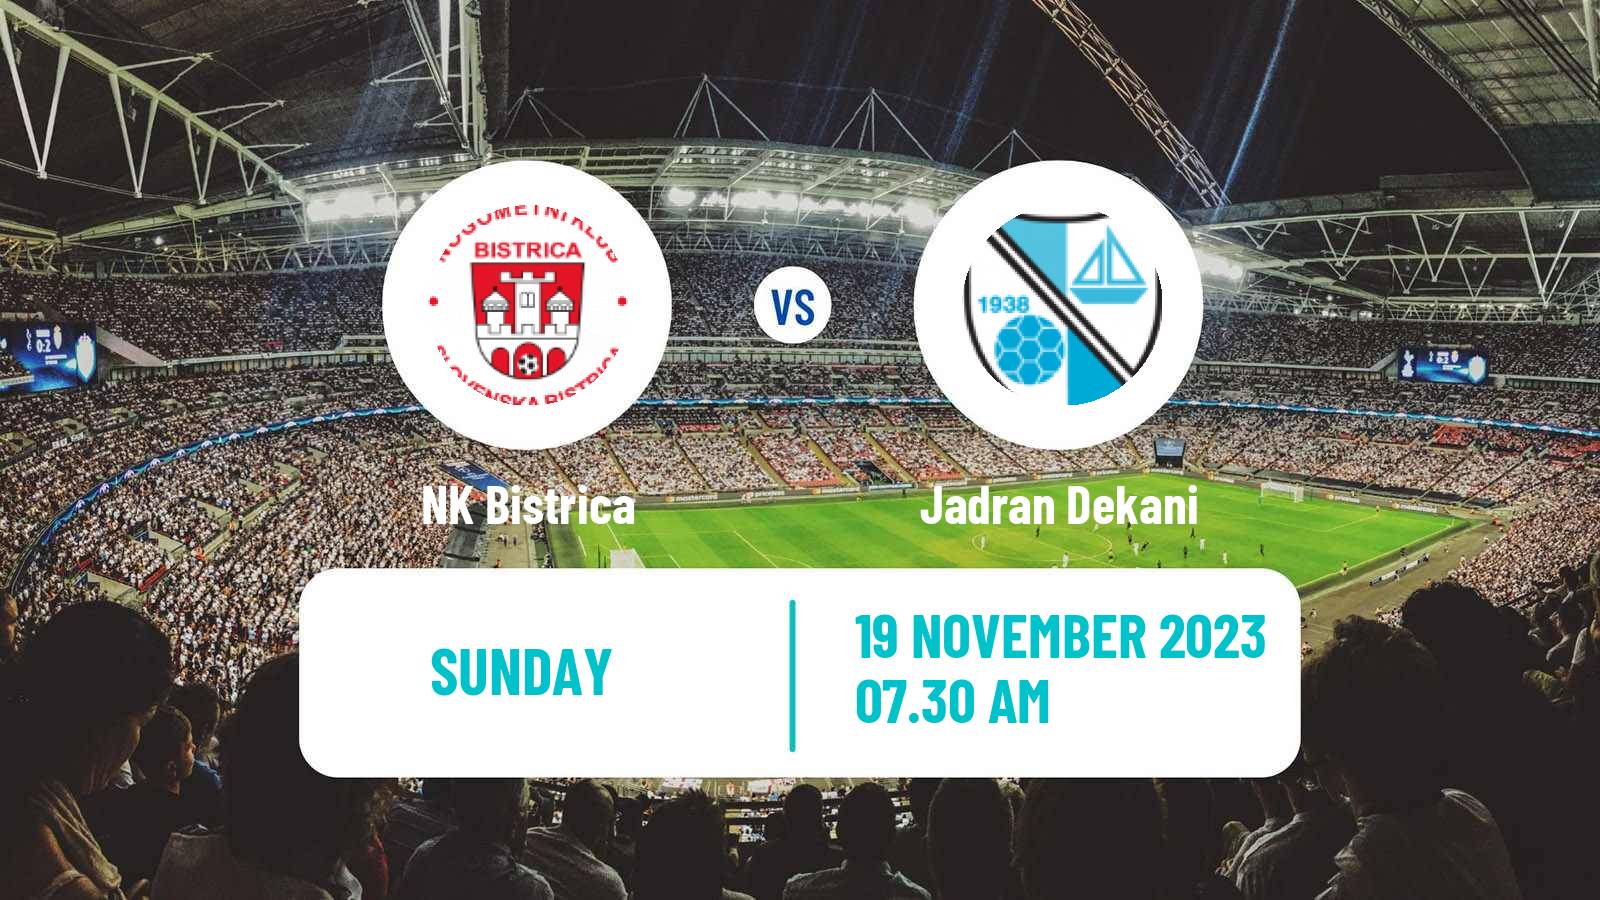 Soccer Slovenian 2 SNL Bistrica - Jadran Dekani